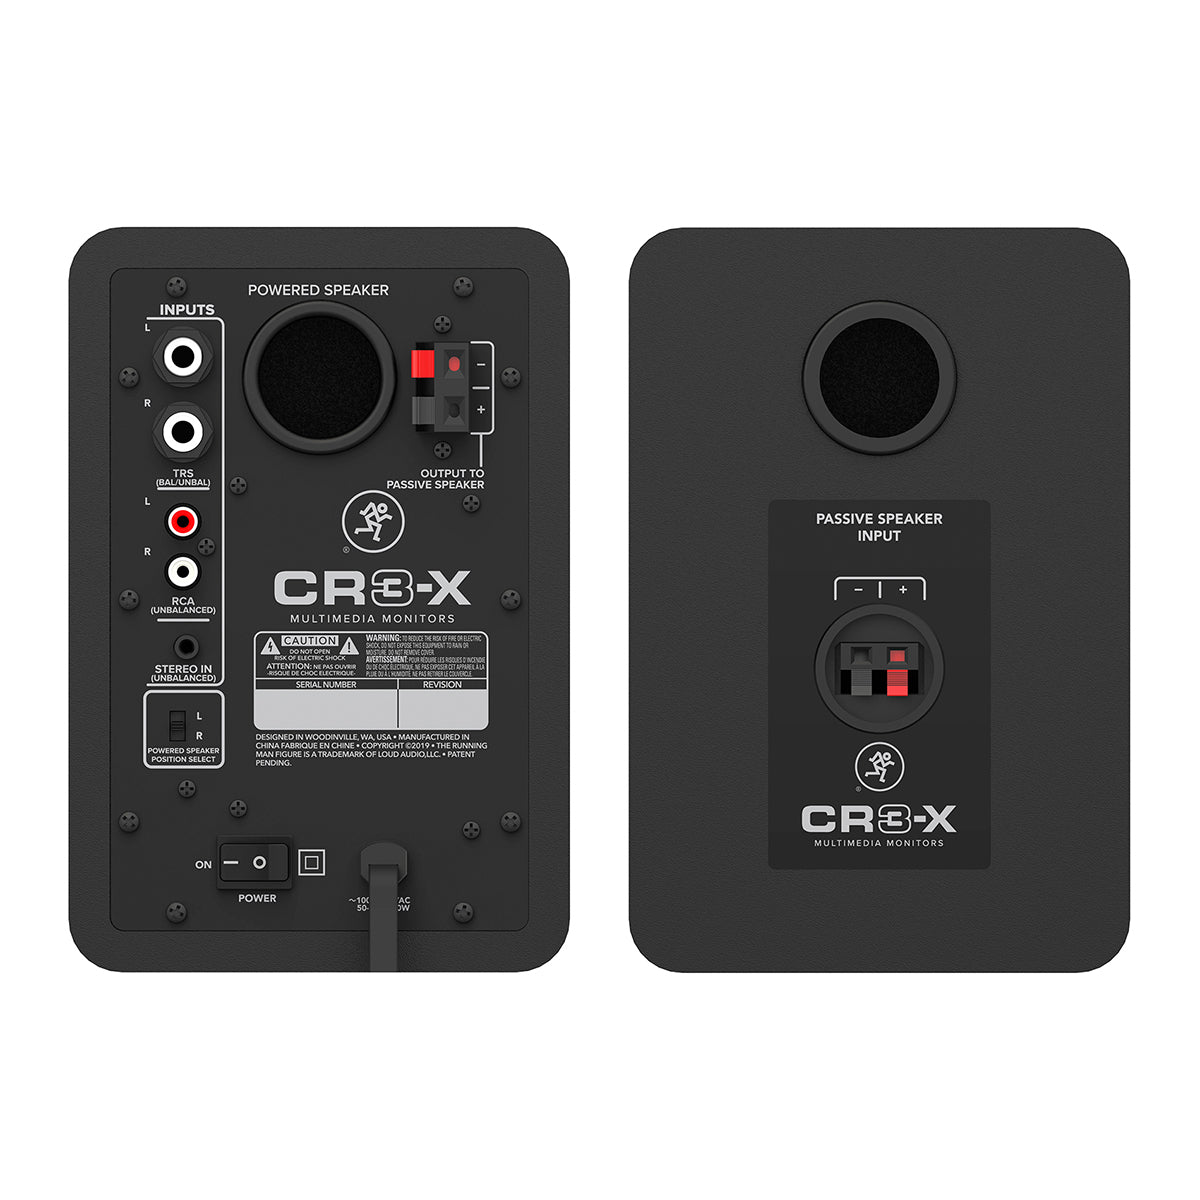 Mackie CR5-X Monitors